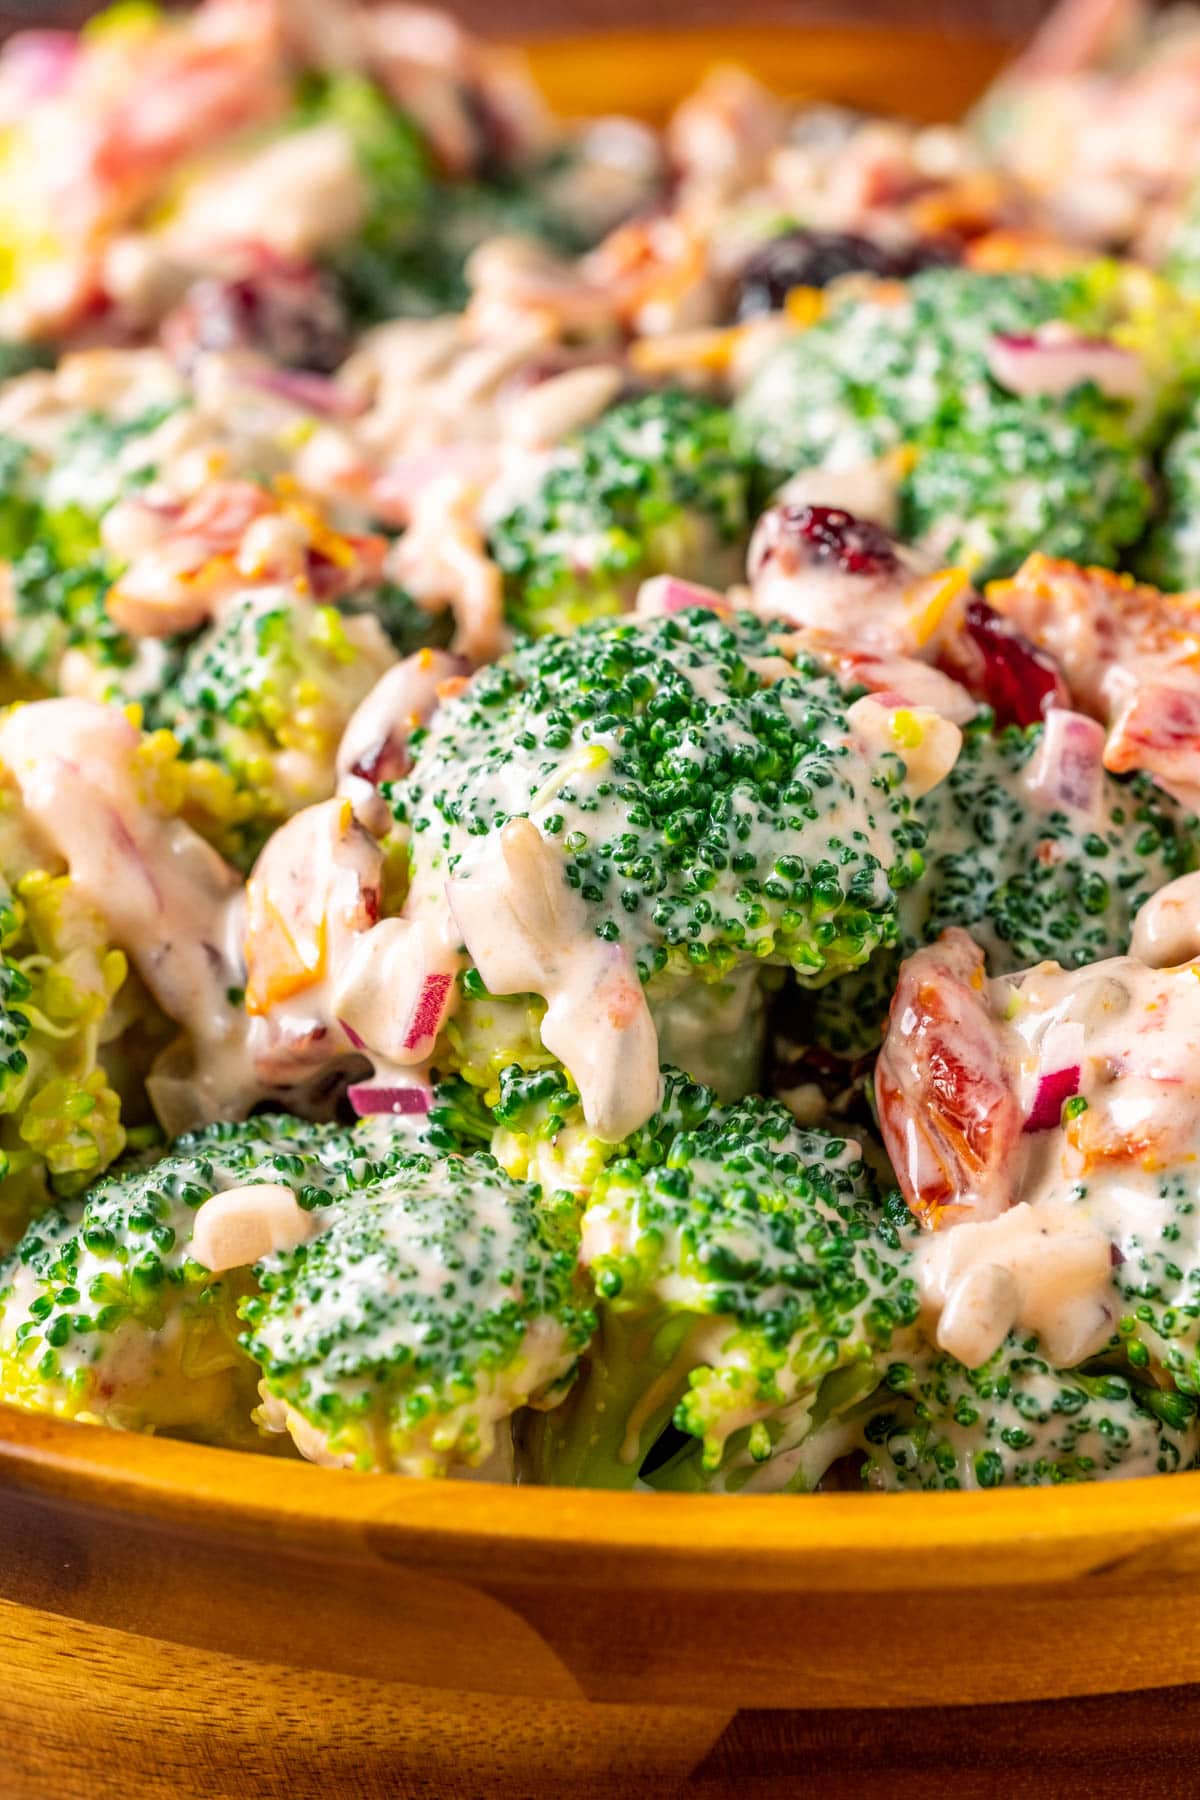 Vegan broccoli salad in a wooden salad bowl.